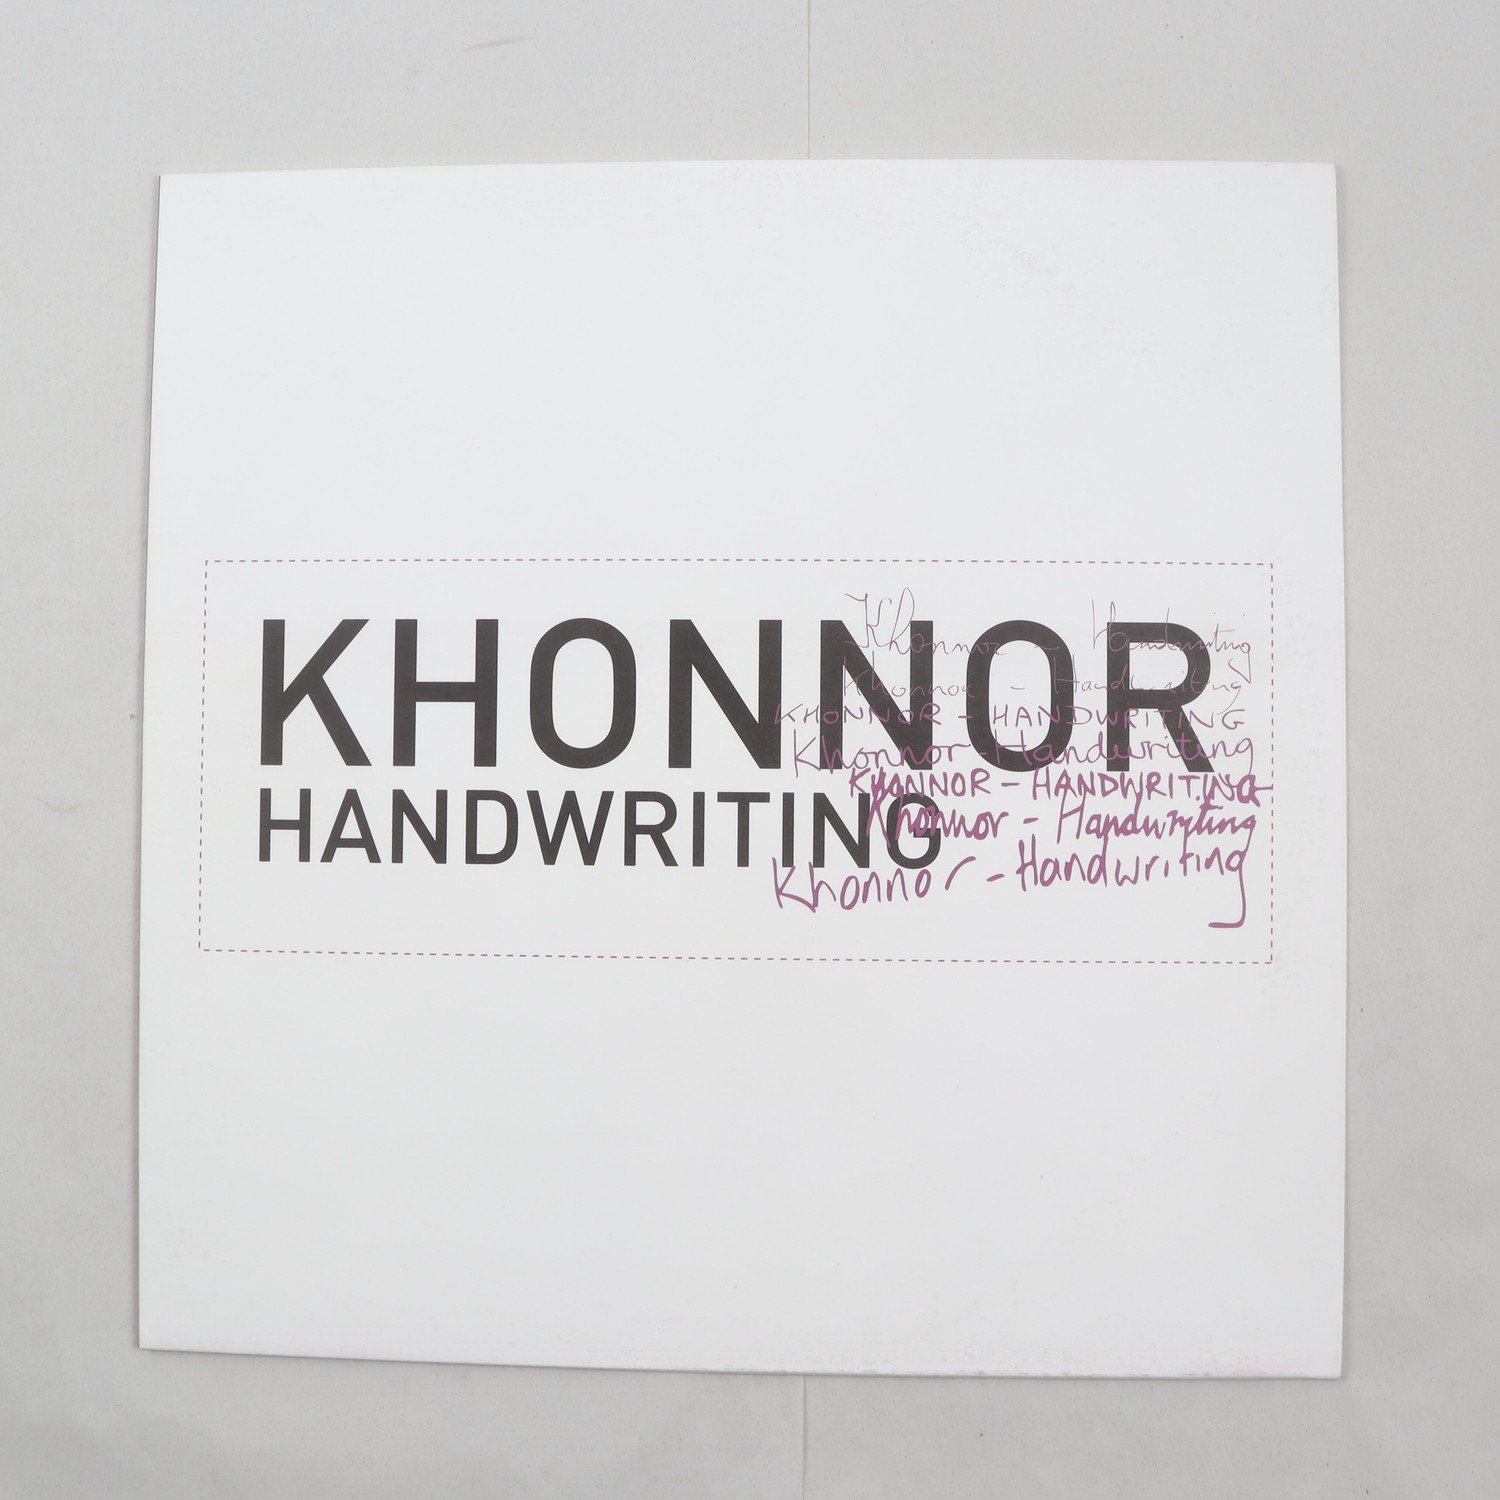 LP Khonnor, Handwriting